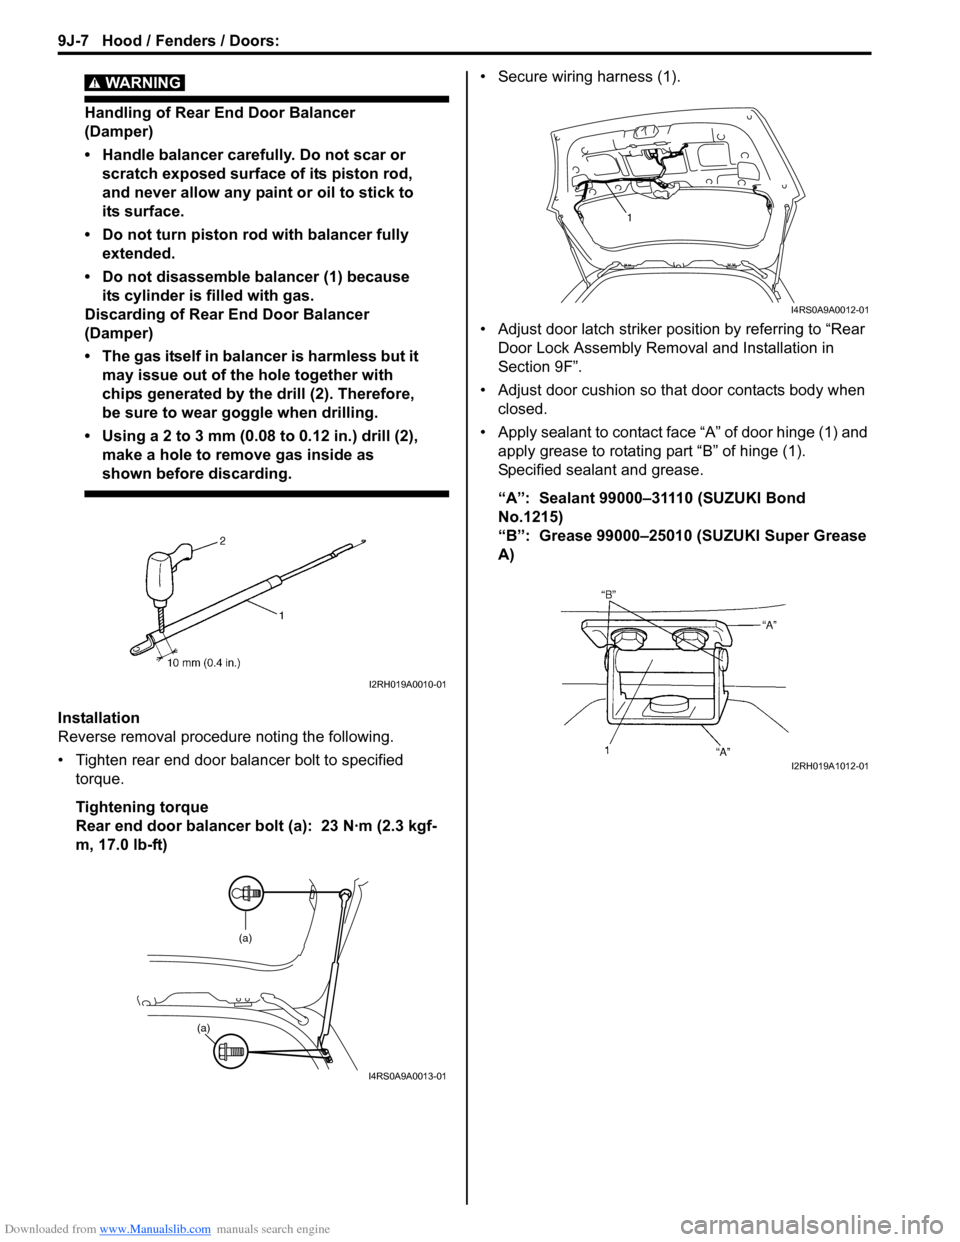 SUZUKI SWIFT 2006 2.G Service User Guide Downloaded from www.Manualslib.com manuals search engine 9J-7 Hood / Fenders / Doors: 
WARNING! 
Handling of Rear End Door Balancer 
(Damper)
• Handle balancer carefully. Do not scar or scratch expo